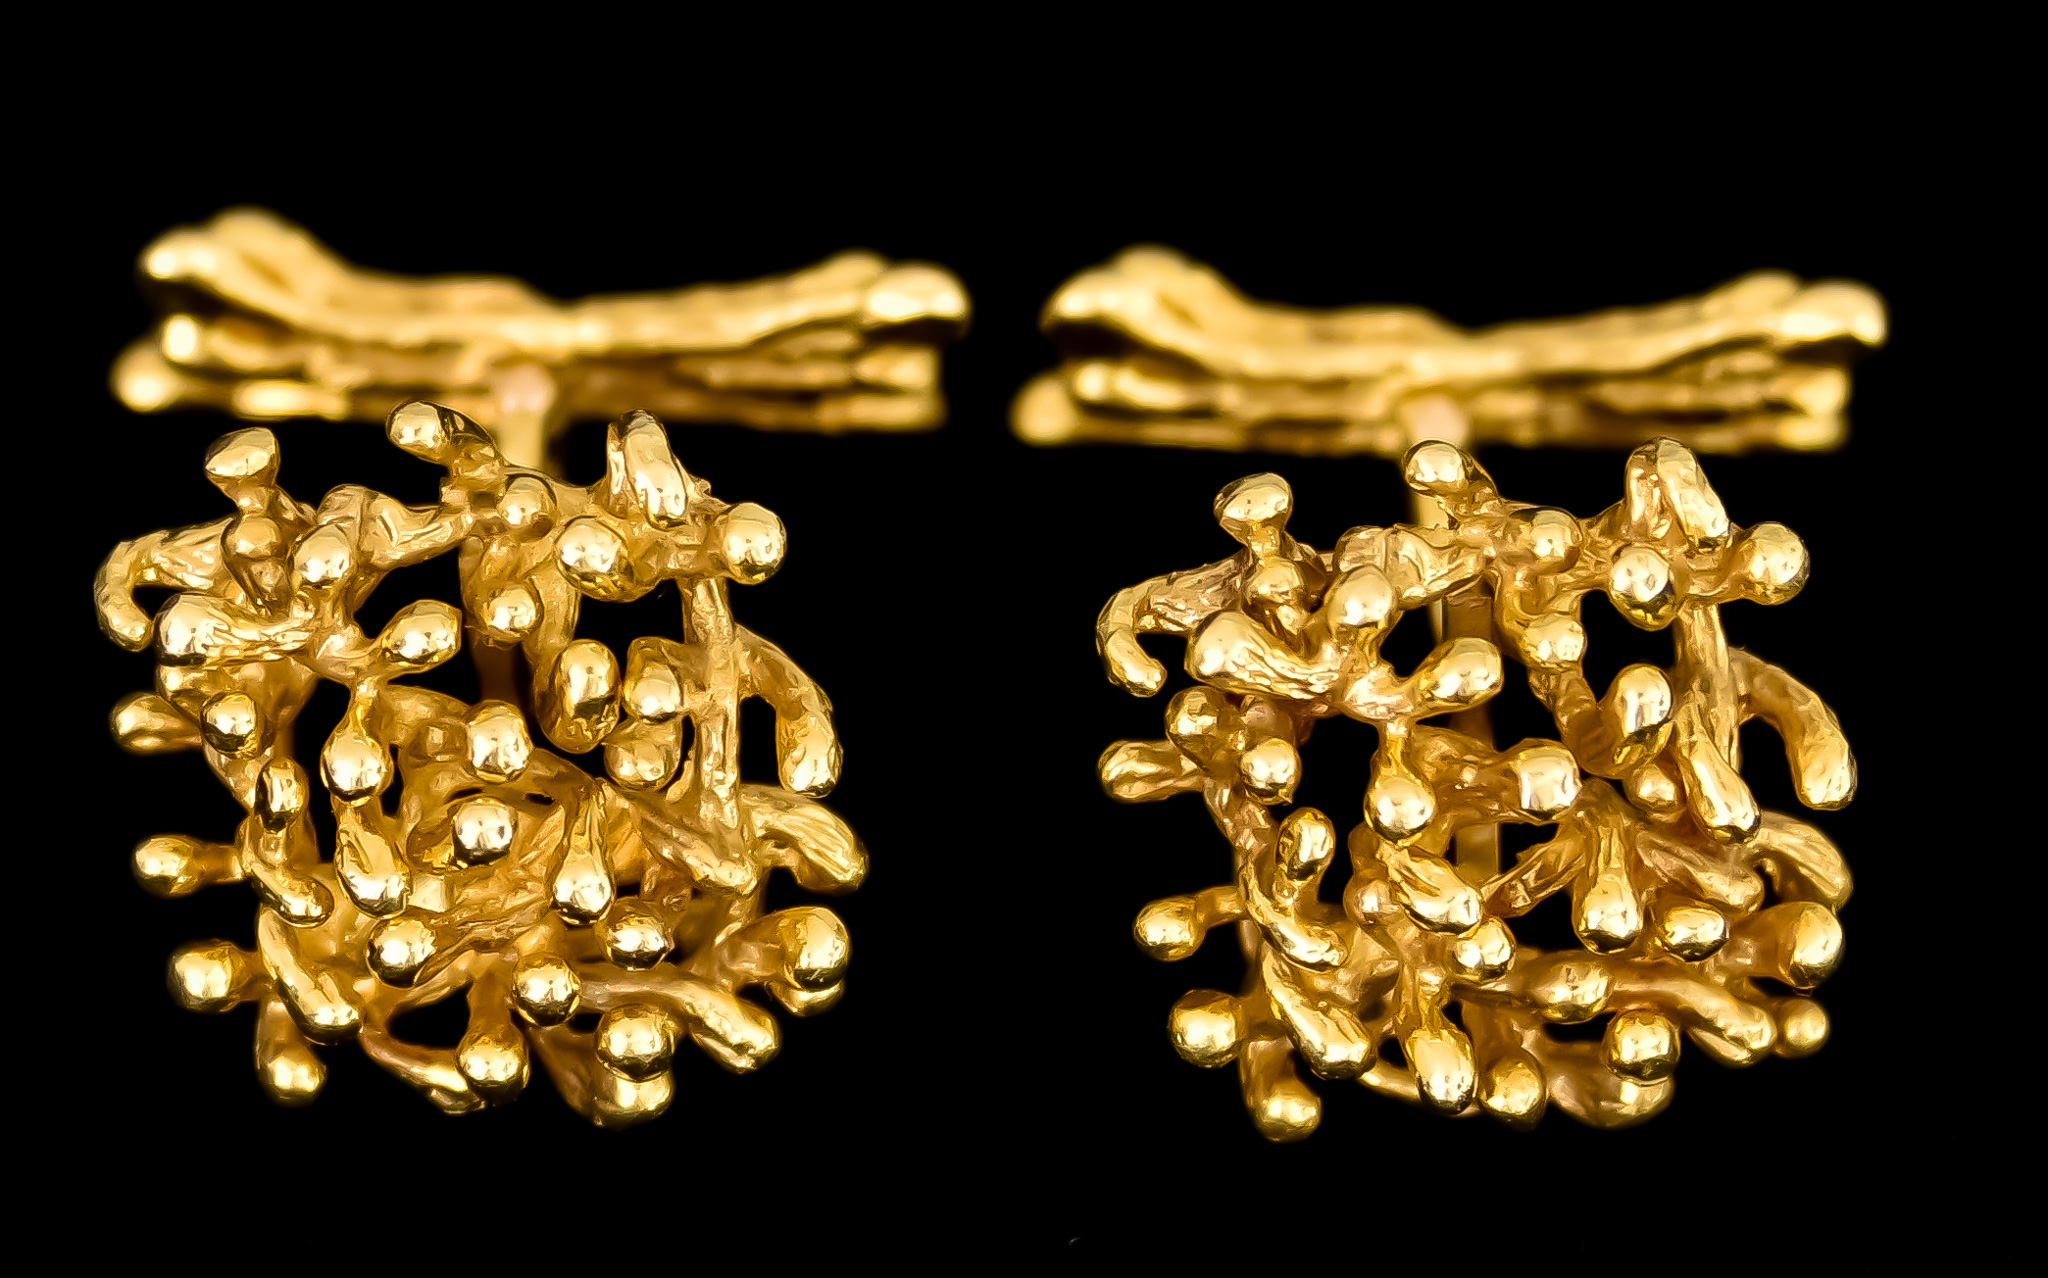 A Pair of 18ct Gold Cuff Links, gross weight 23.3g